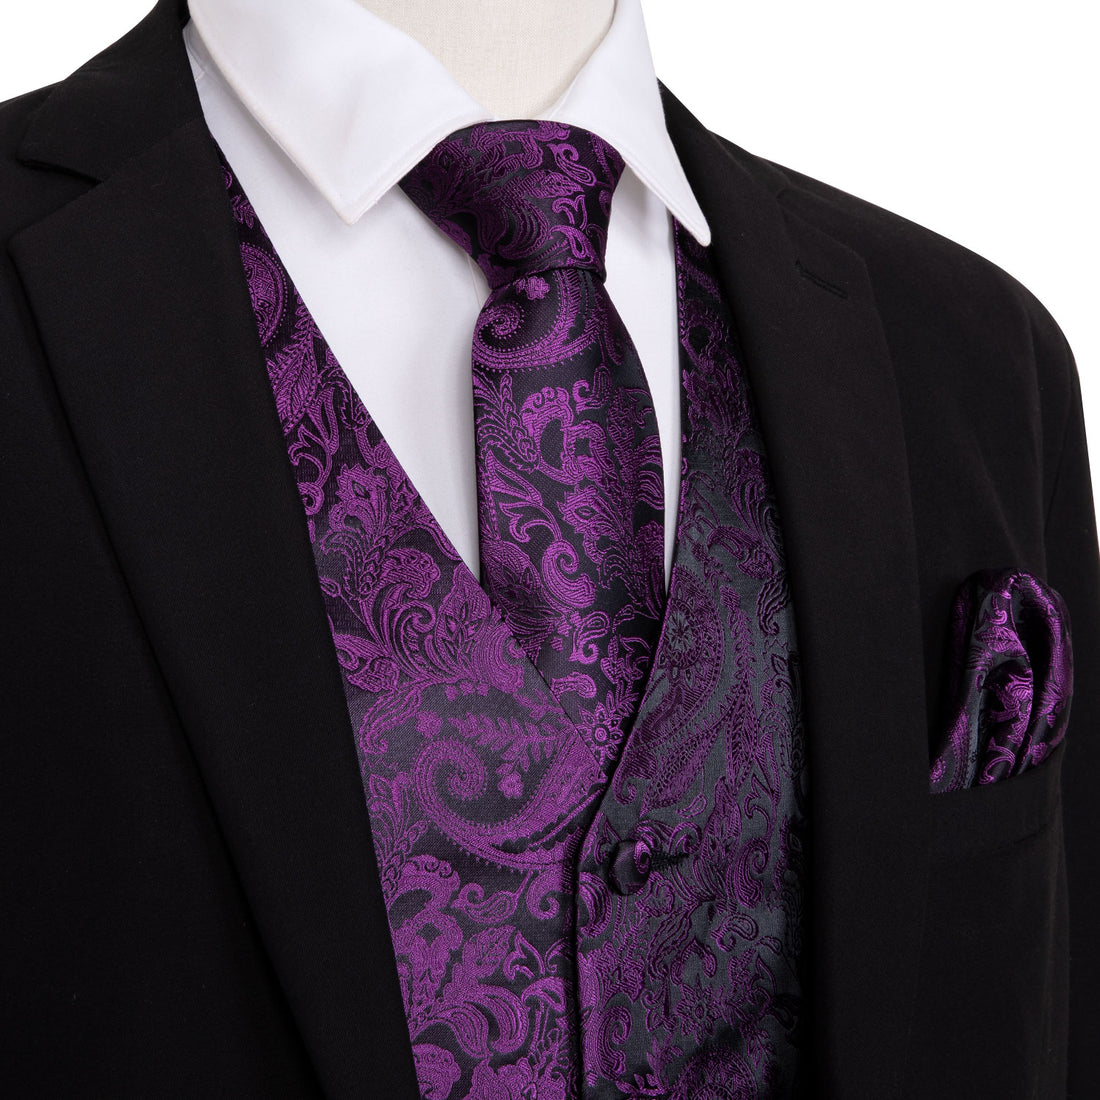 Barry Wang Purple Floral No-collar Vest Tie Pocket square Cufflinks